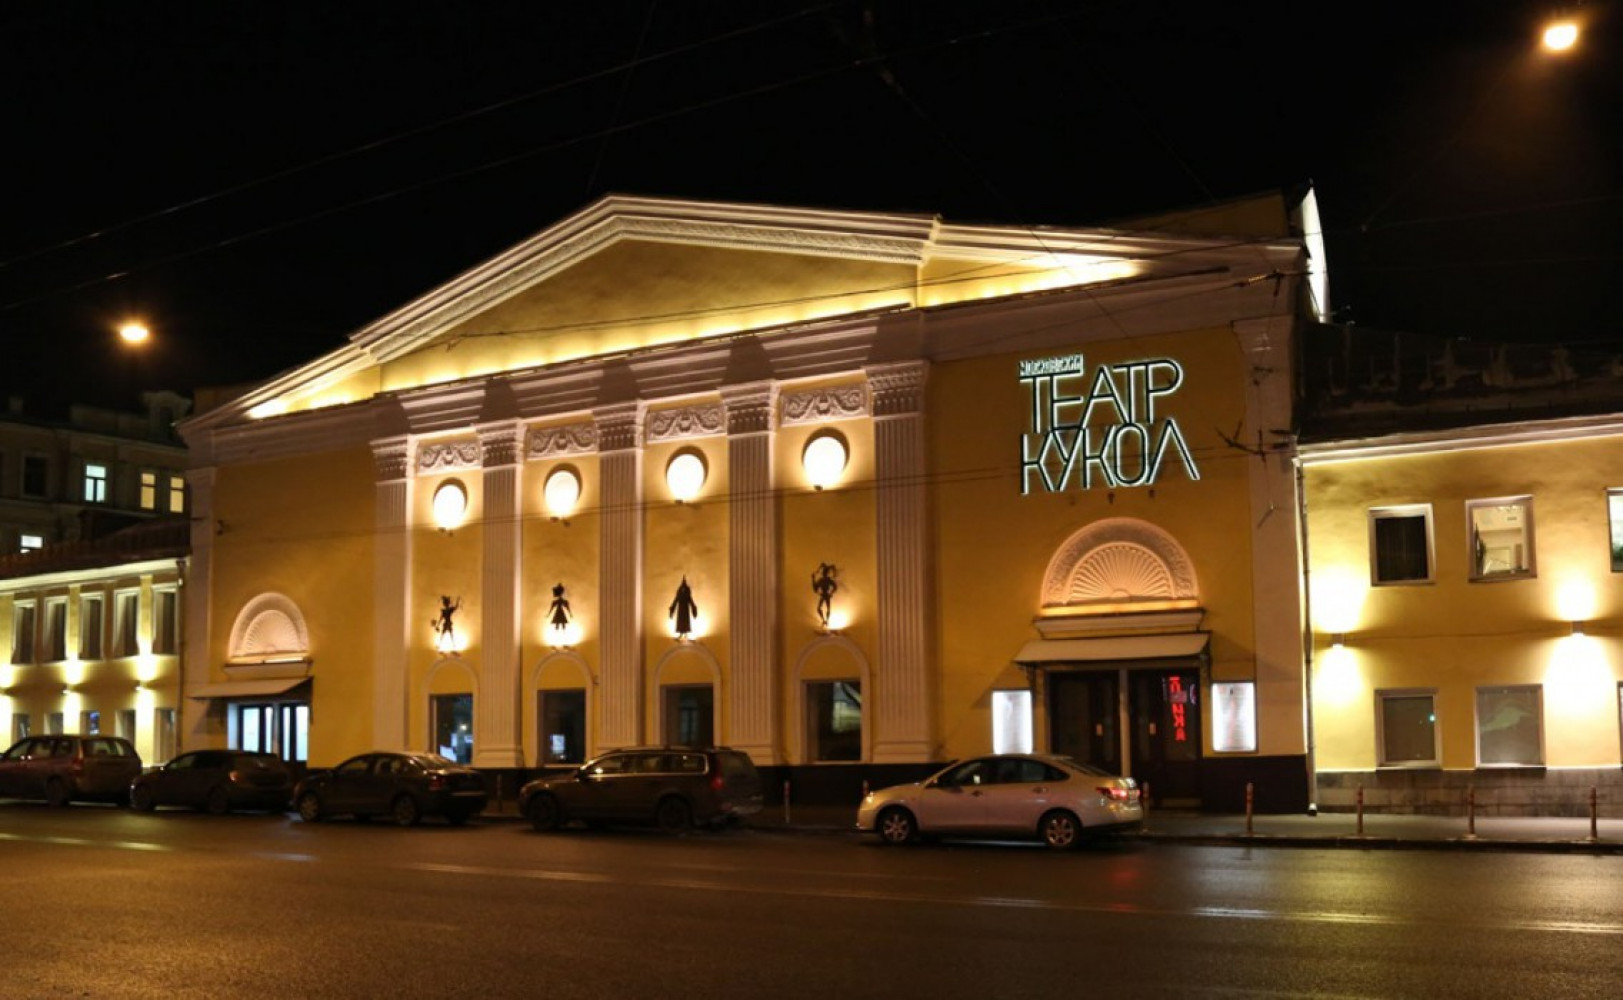 Государственные театры кукол москвы